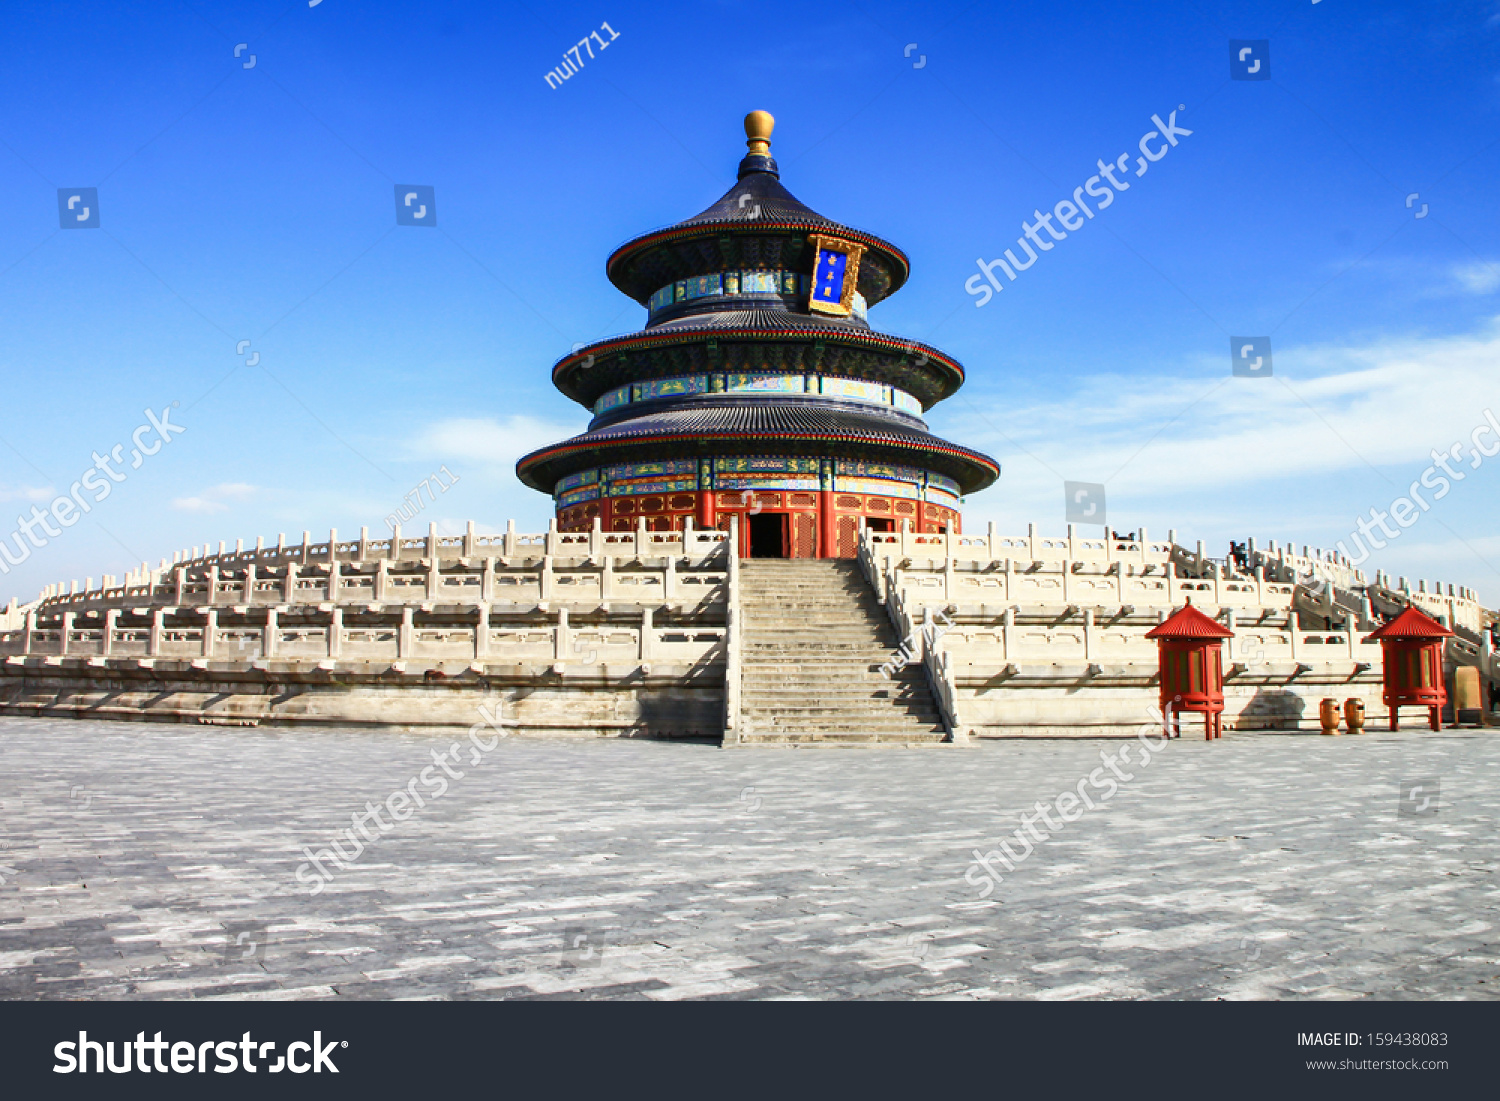 Temple Heaven Tiantan Pagoda Blue Sky Stock Photo 159438083 - Shutterstock